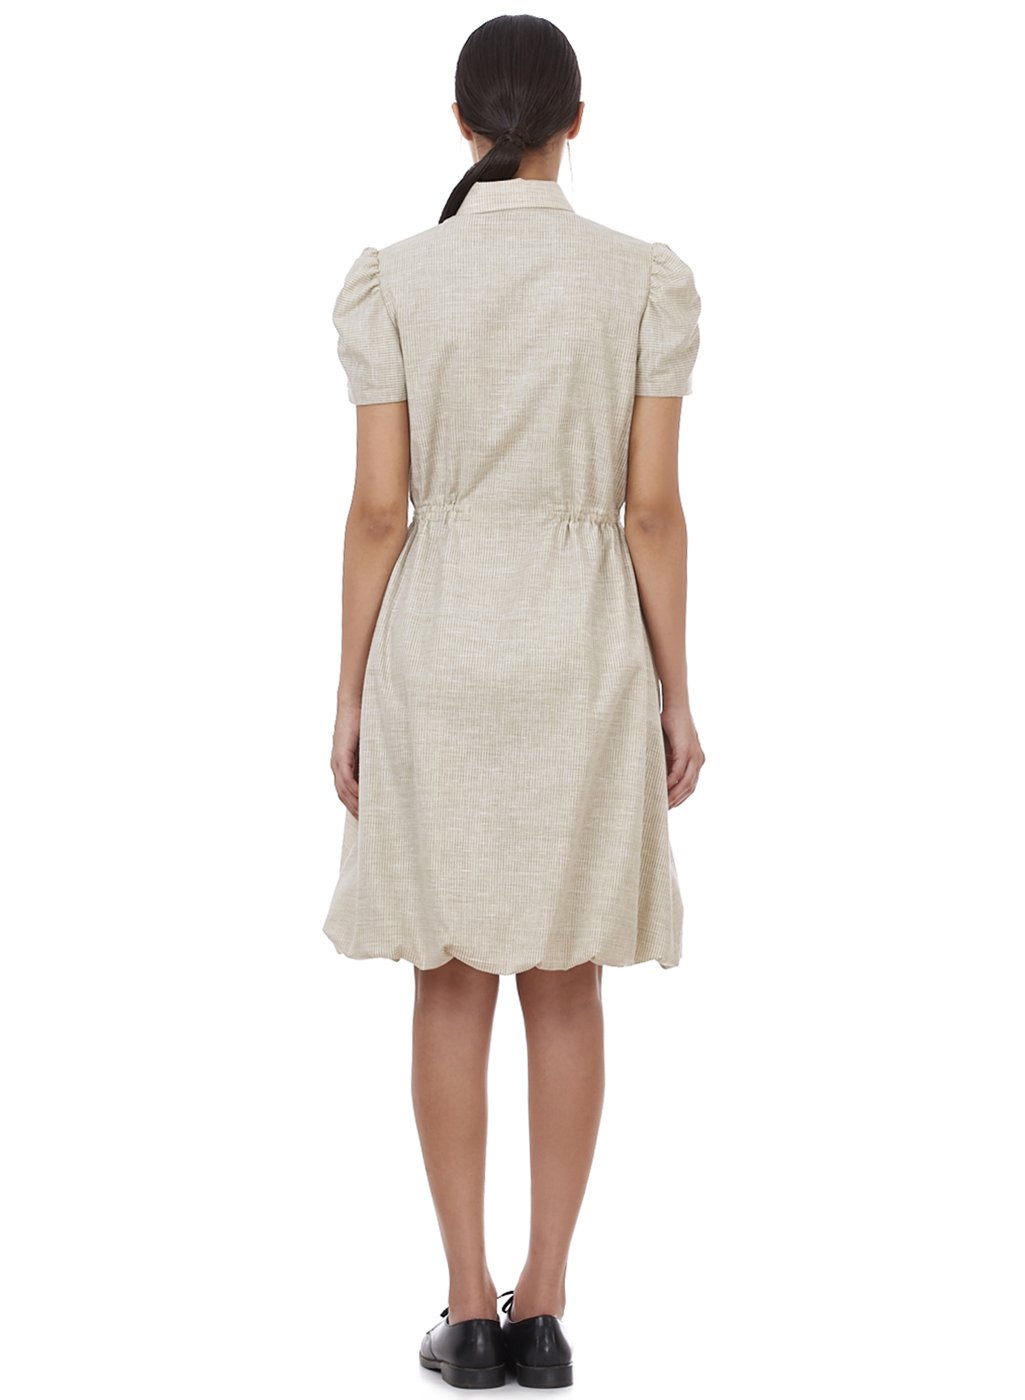 Lorena Pinstripe Dress - Genes online store 2020